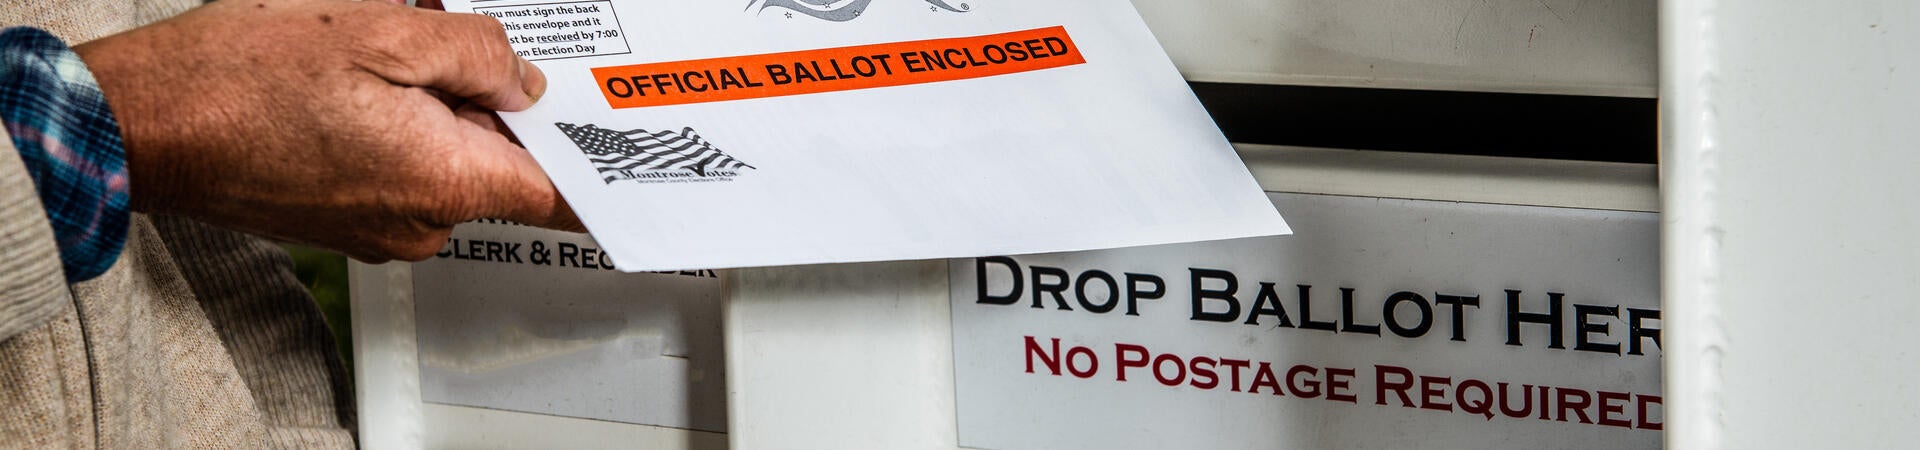 Mail ballot stock photo